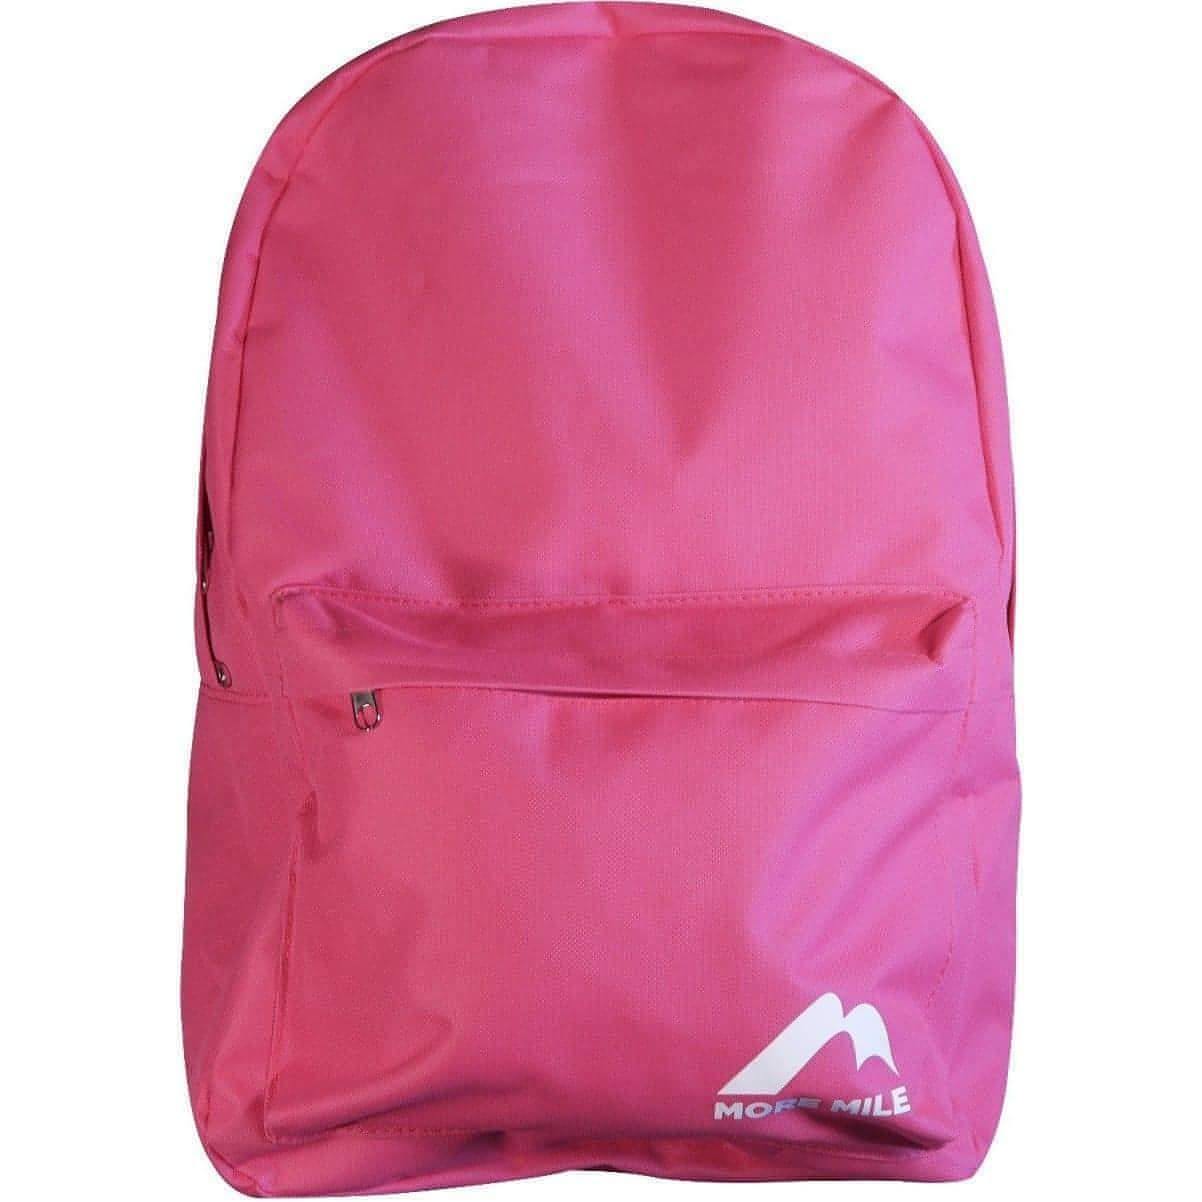 More Mile Cross Avenue Backpack - Pink 5057775309864 - Start Fitness